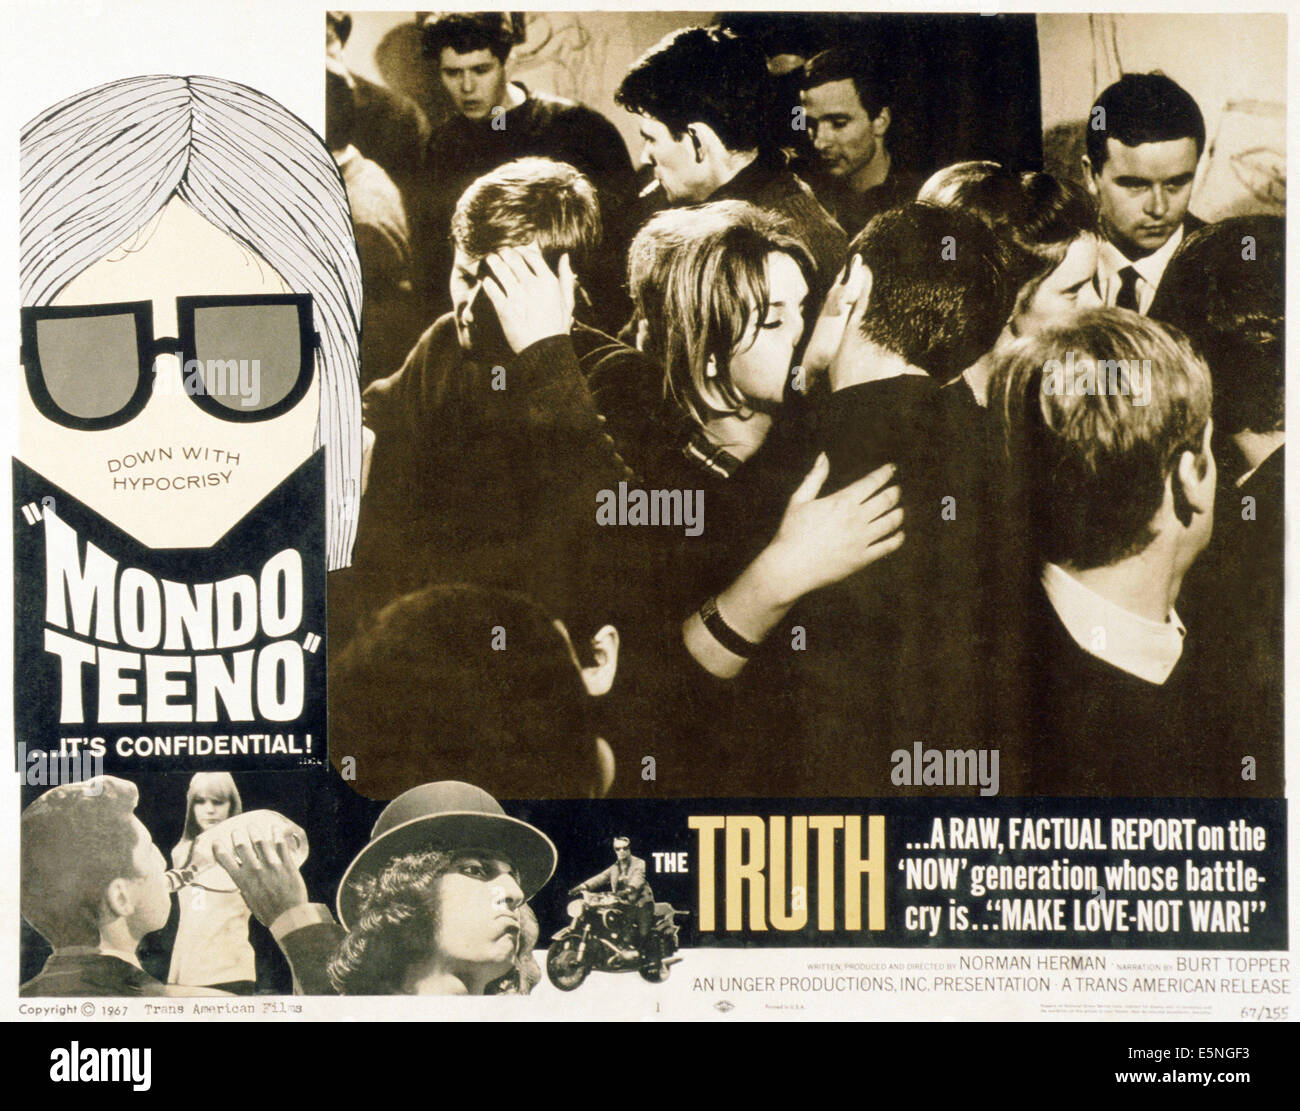 Mondo teeno aka teenage rebellion hi-res stock photography and